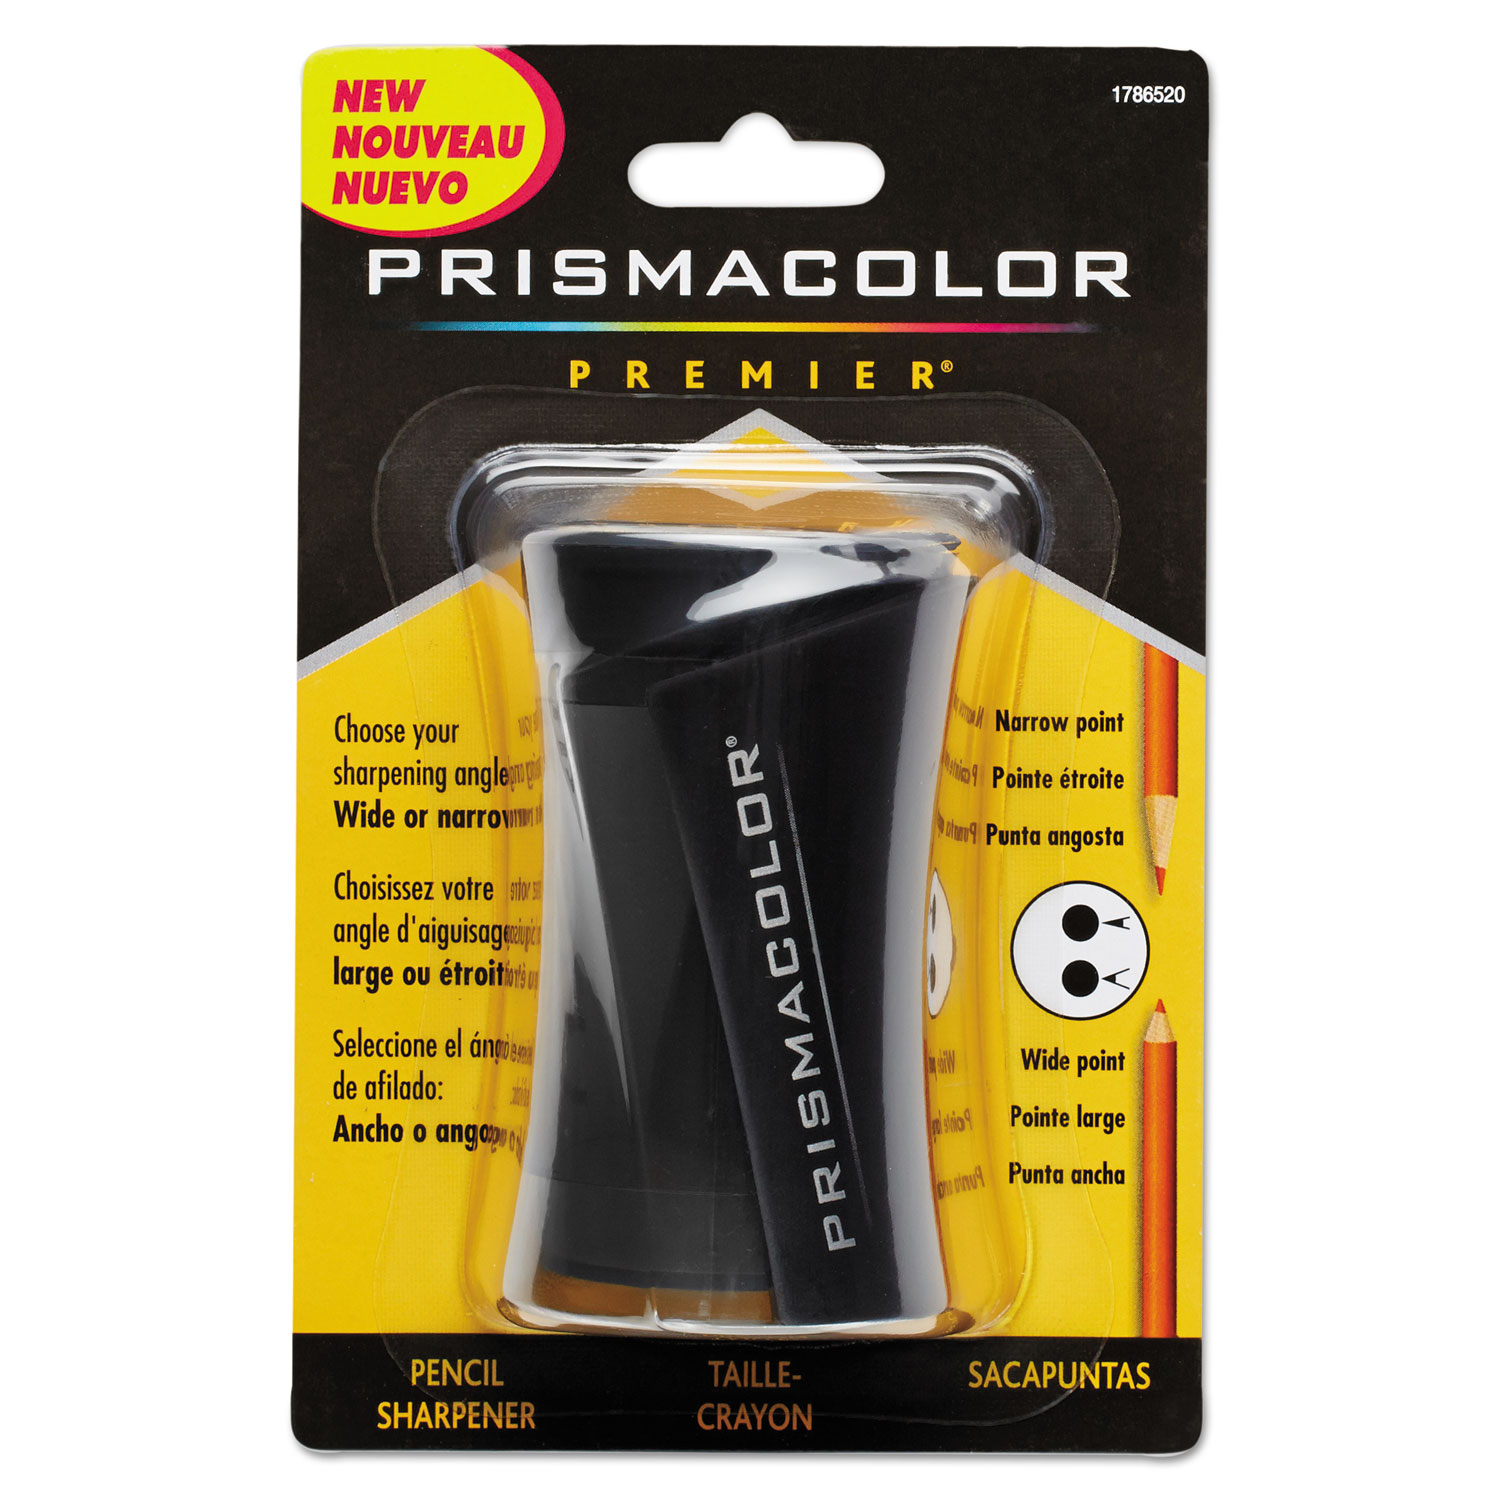  Prismacolor 1786520 Premier Pencil Sharpener, 3.63 x 1.63 x 5.5, Black (SAN1786520) 